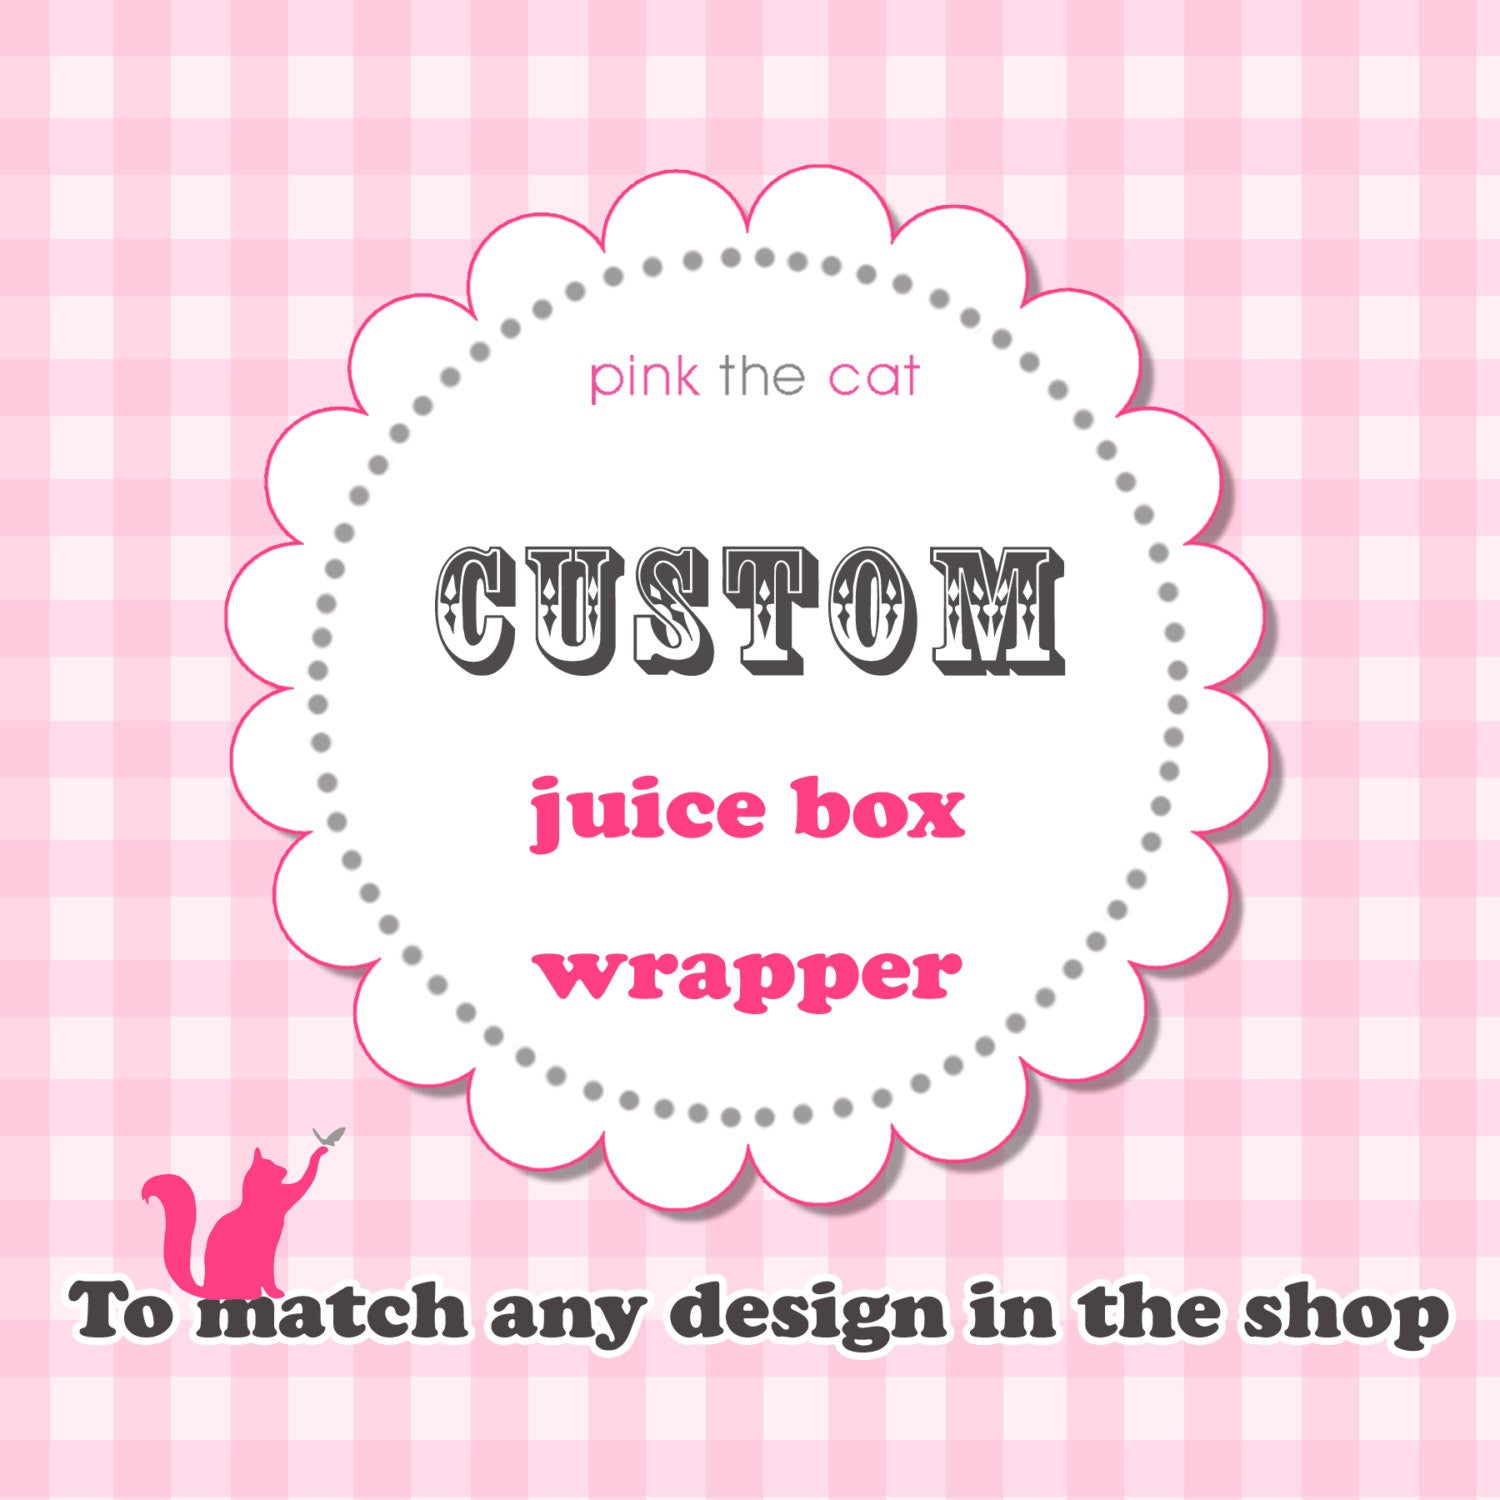 juice box wrapper